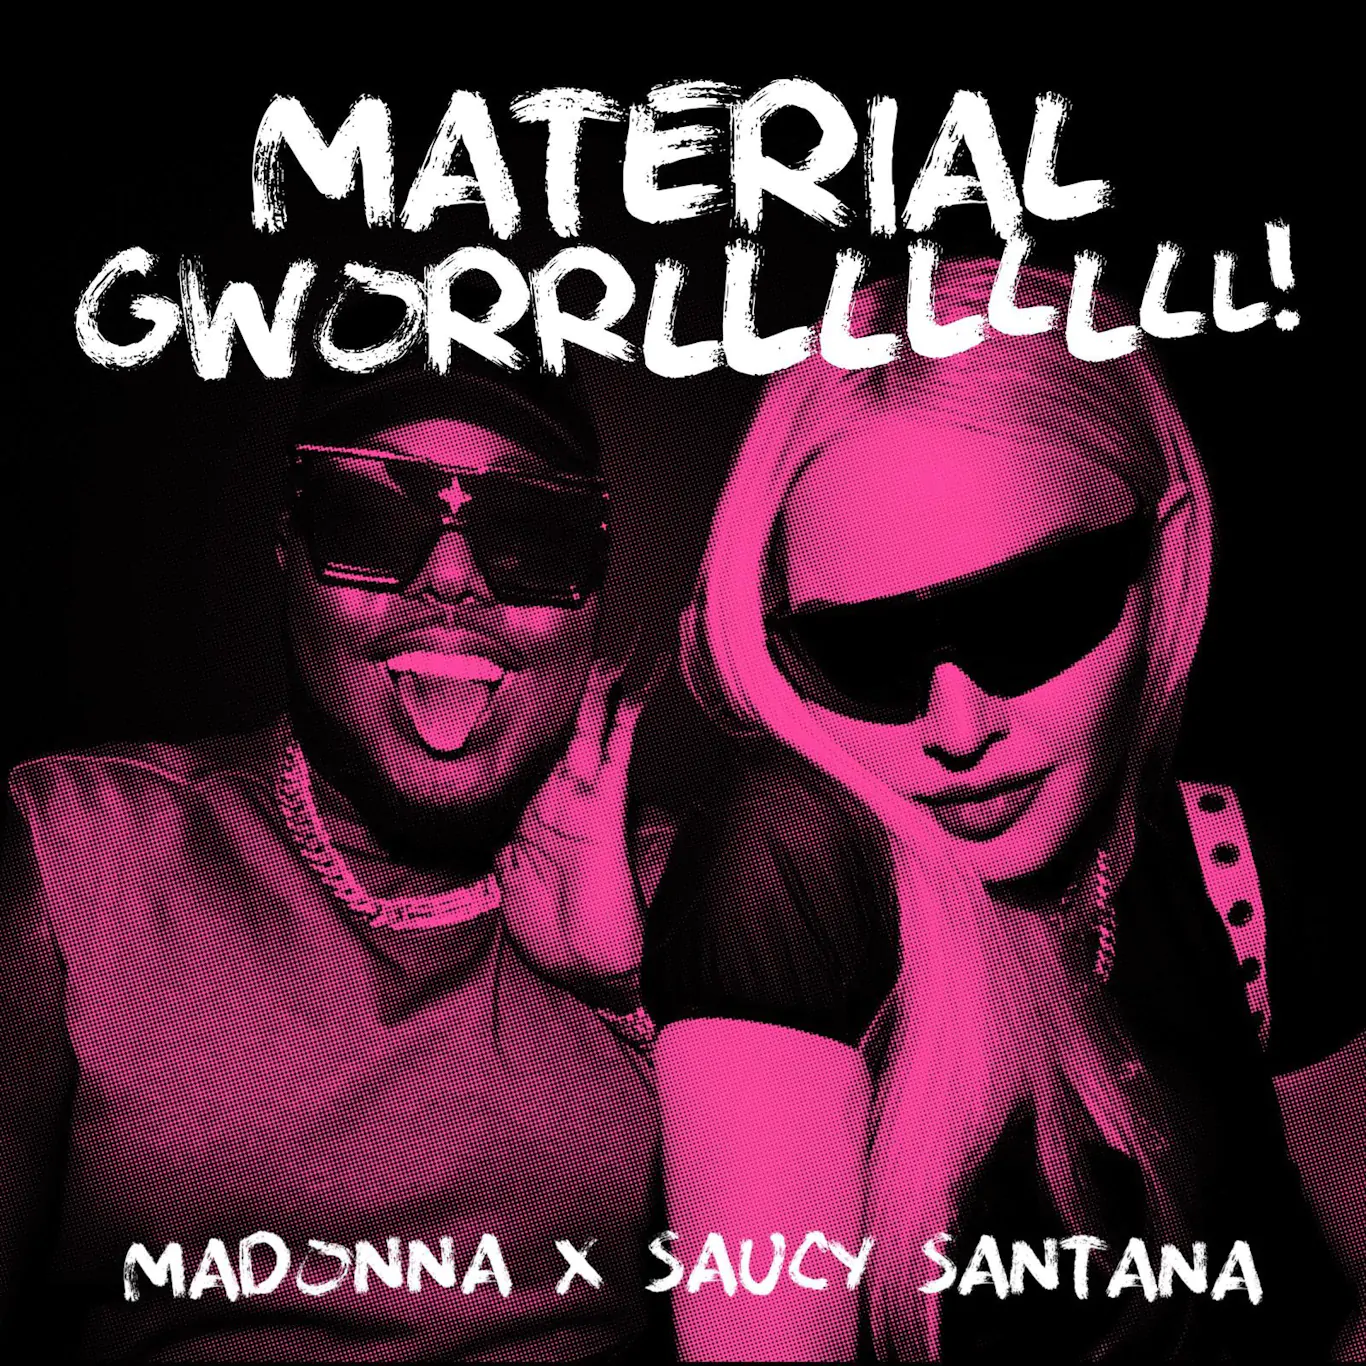 MADONNA teams up with rapper Saucy Santana to release ‘Material Gworrllllllll!’ remix